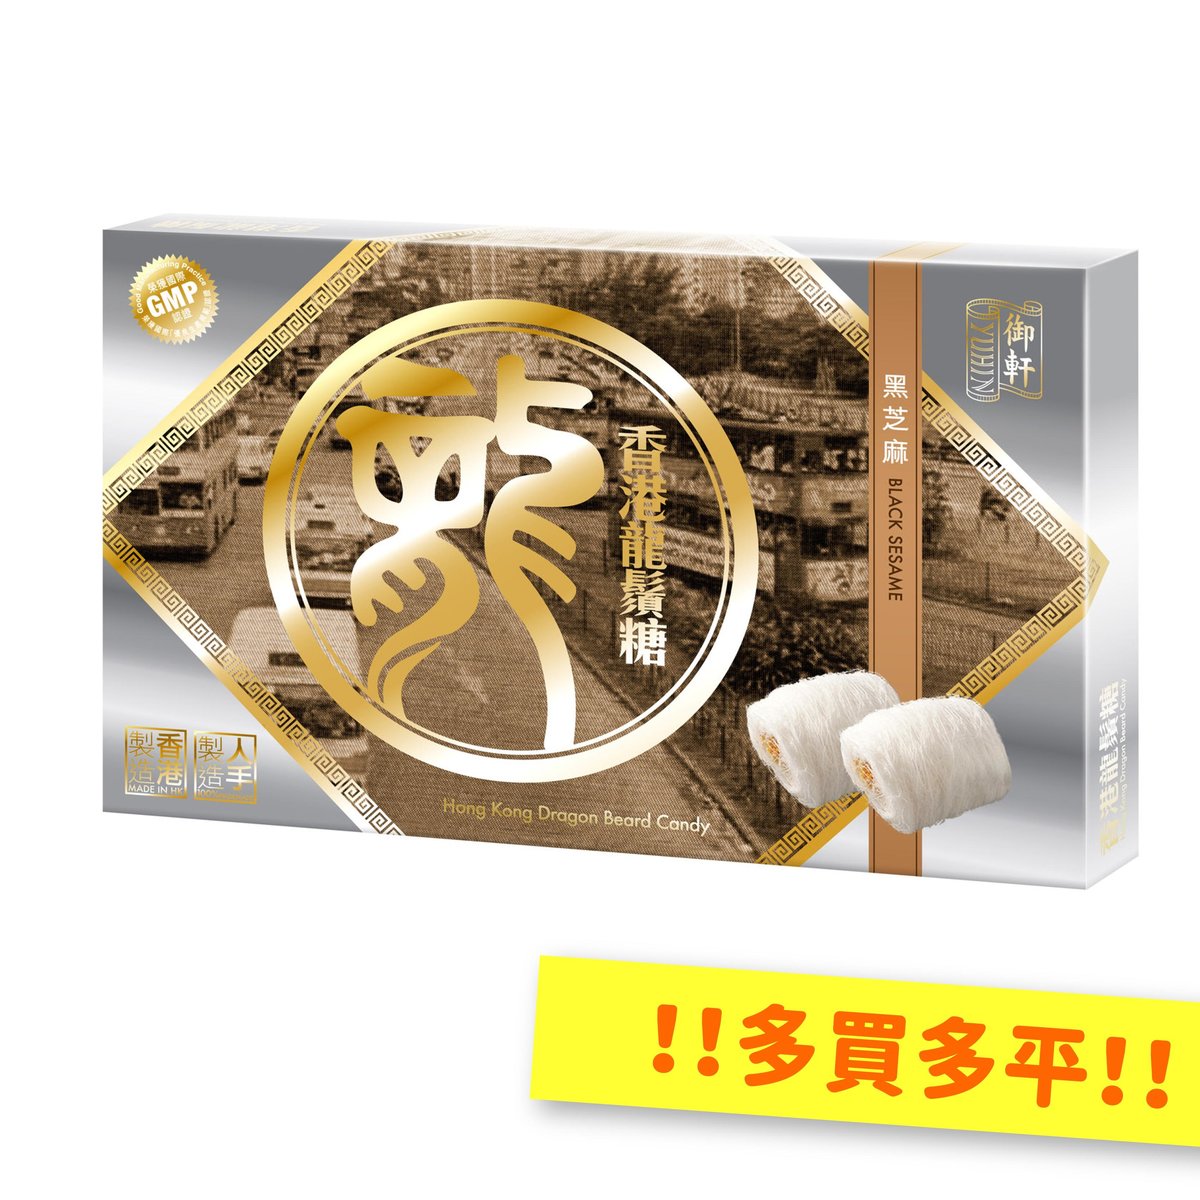 Yuhin Yuhin Black Sesame 12pcs Dragon Beard Candy Hktvmall Online Shopping